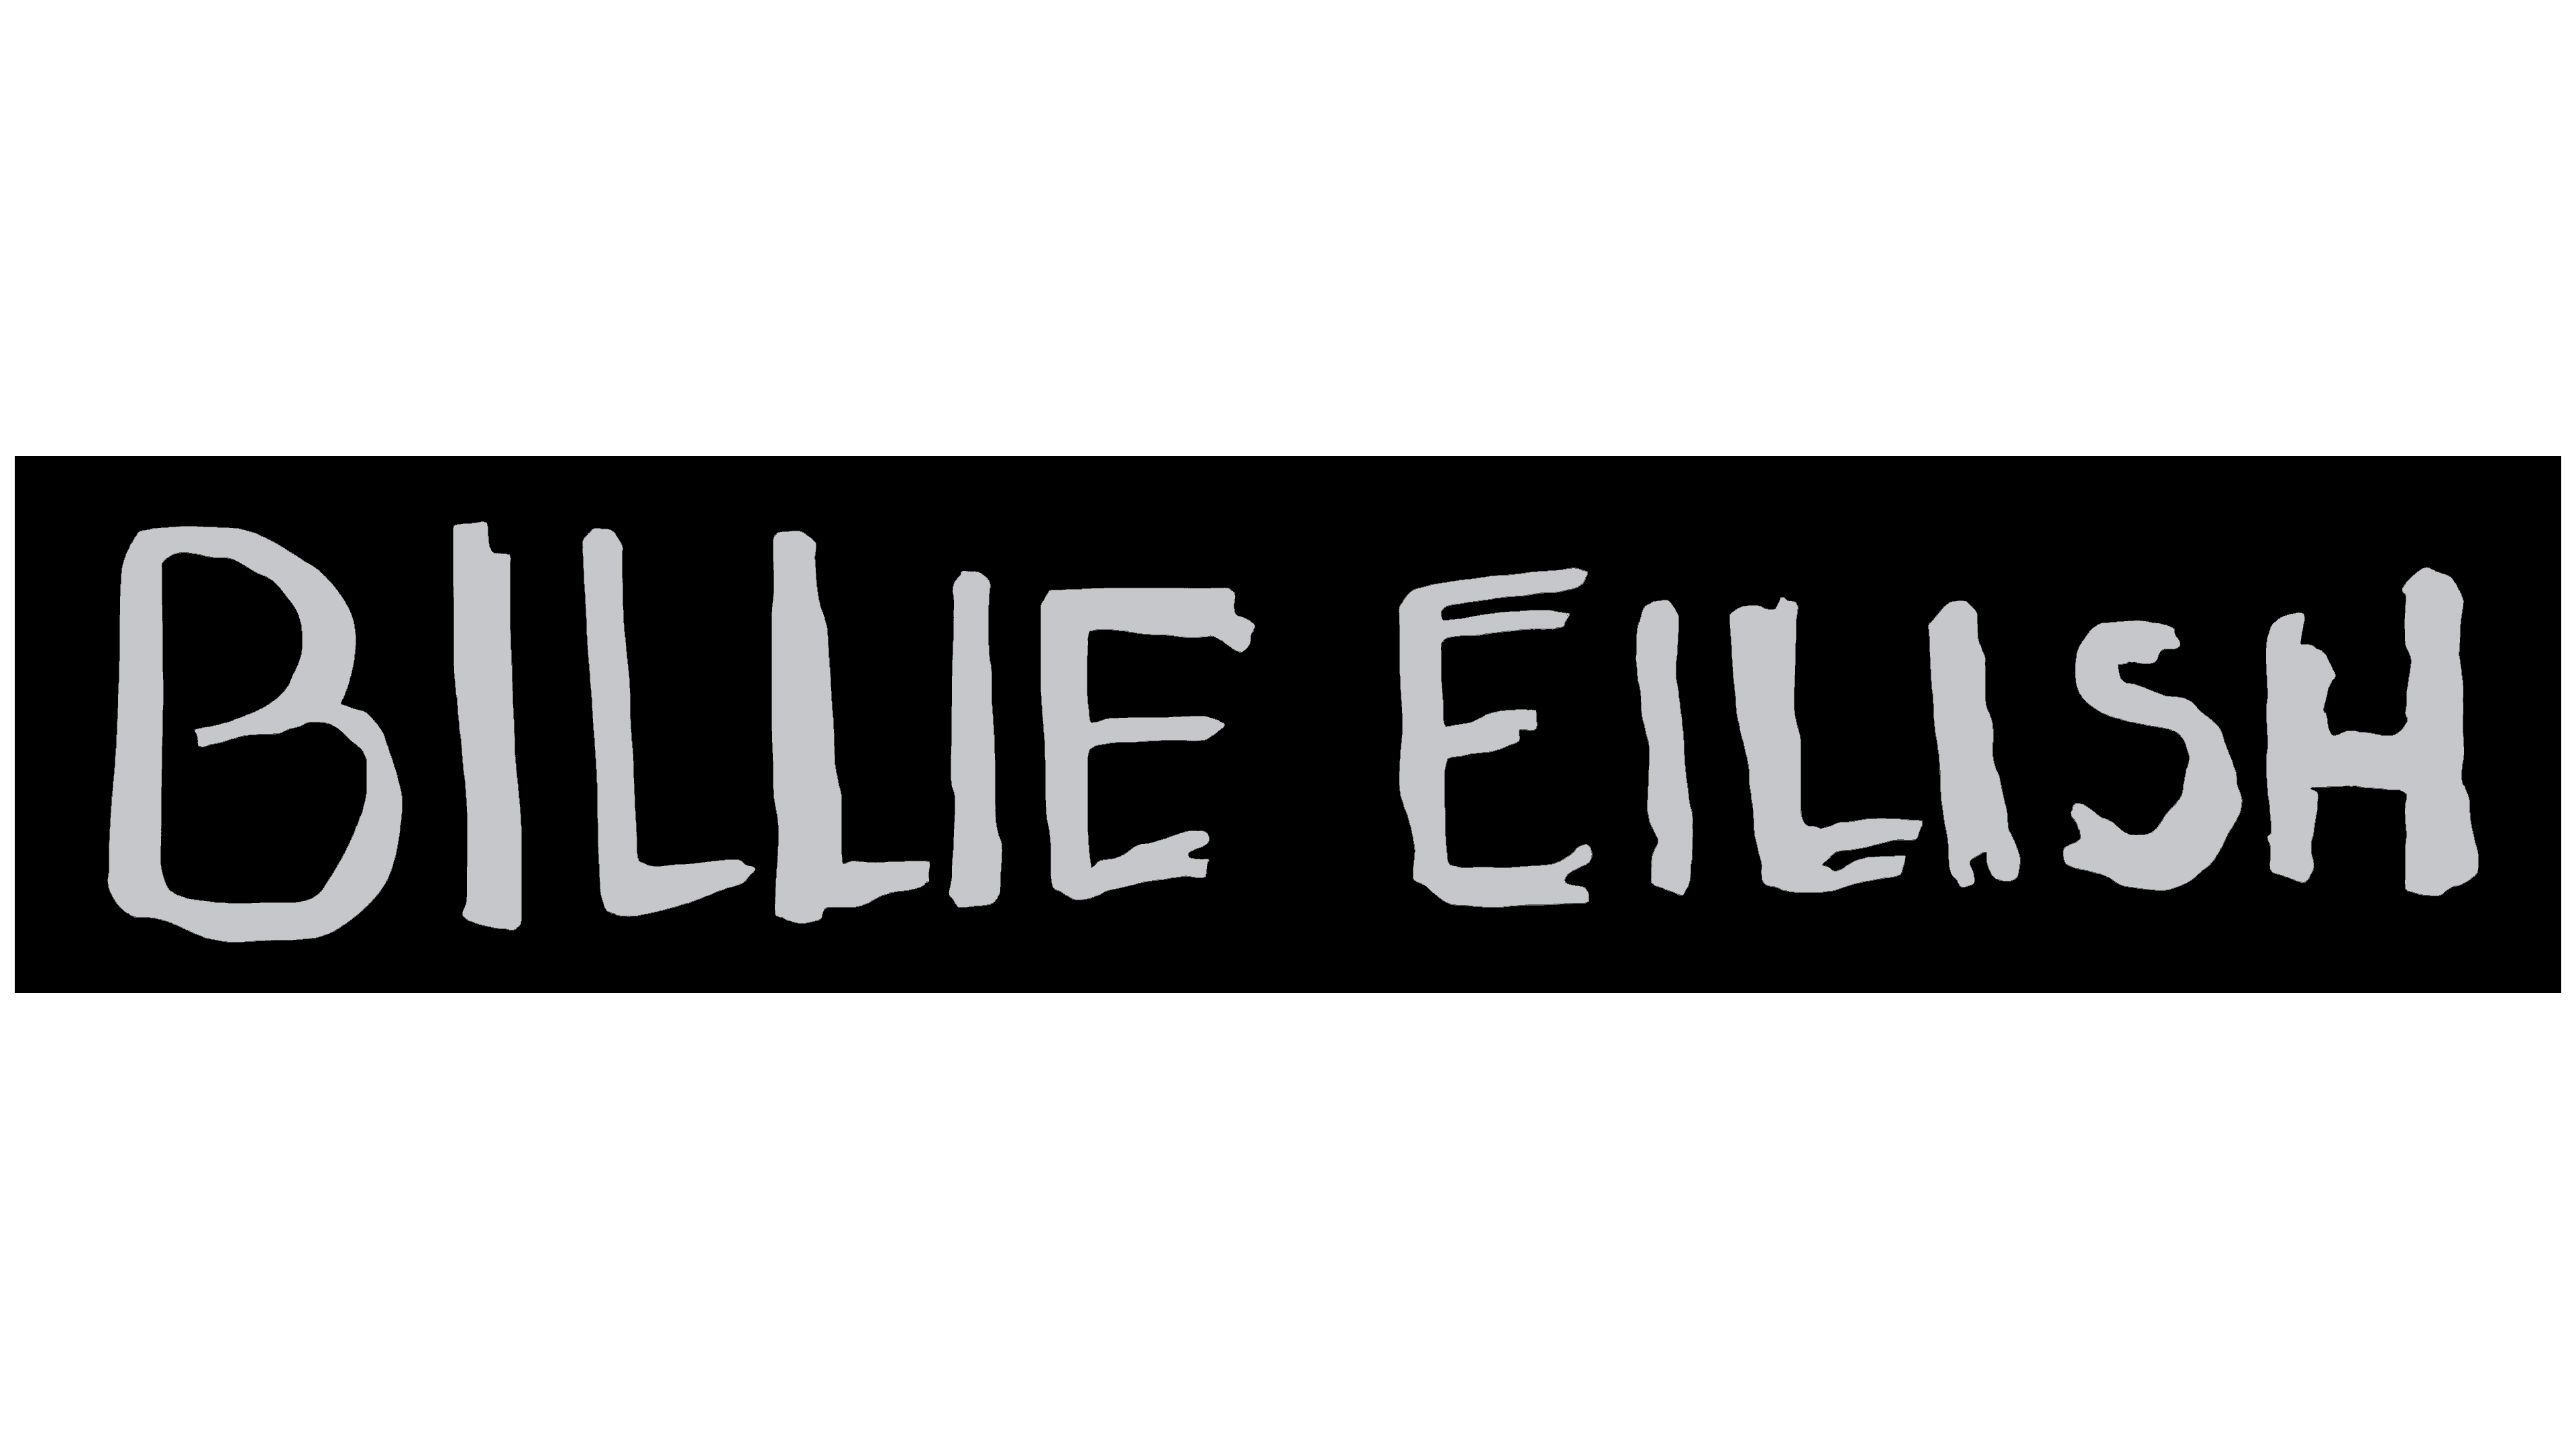 Billie Eilish Logo Png Billie Eilish Logos Album Covers Merch Posters ...